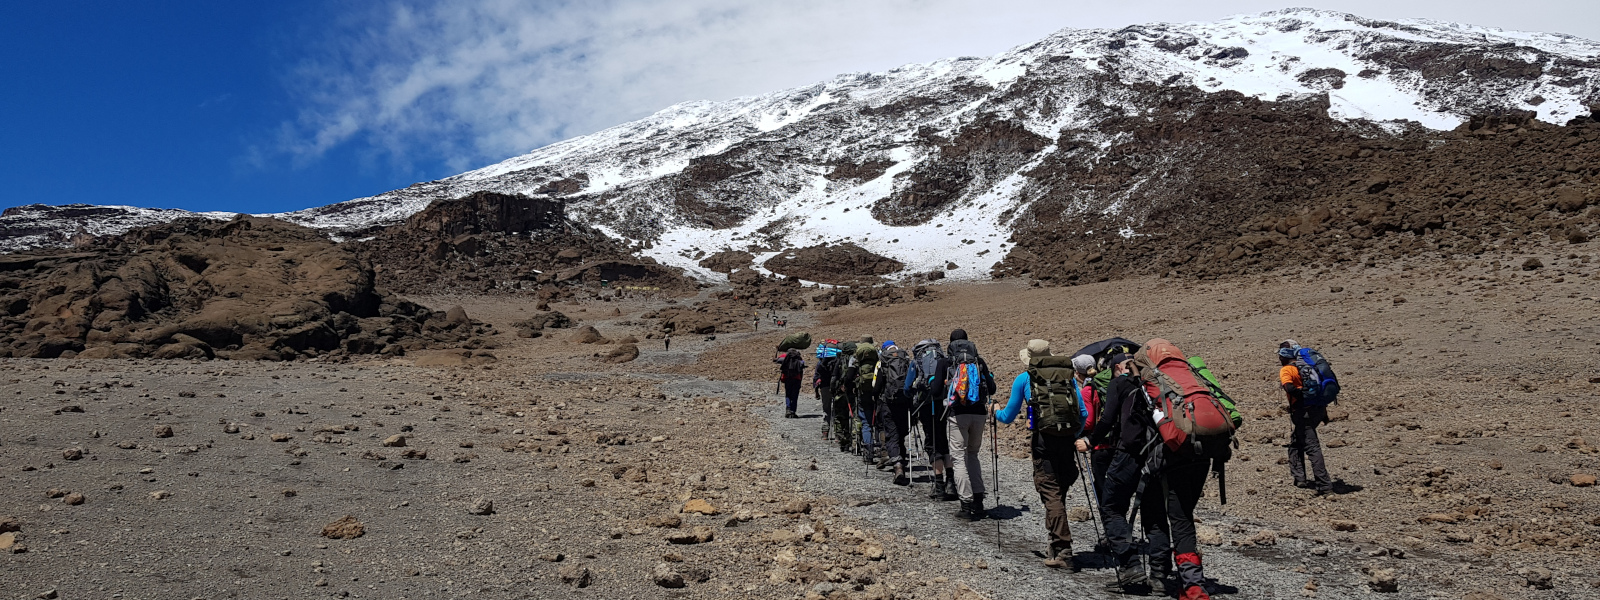 Mount Kilimanjaro via Marangu Route